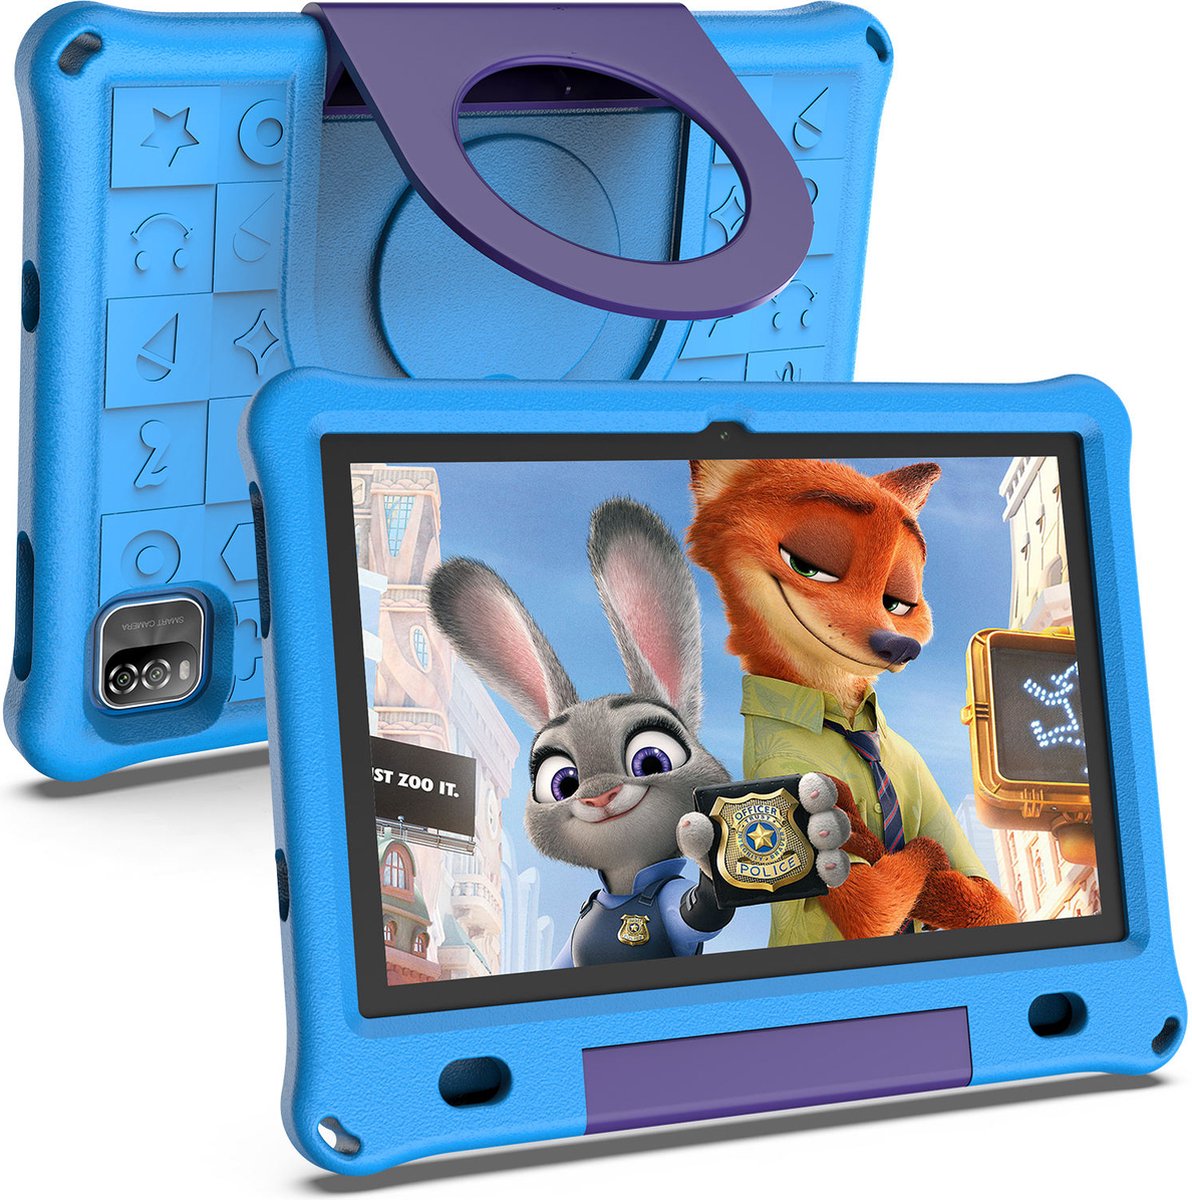 Lipa WQ01 kinder tablet Blue 10.1 inch - Kindertablet vanaf 3 jaar - Kindertablet 10 inch - Tablet kinderen - Android tablet - 64 GB opslag - Groot scherm - Met spellen software - Play store - Ouder bescherming - Bescherming ogen - Met bumper